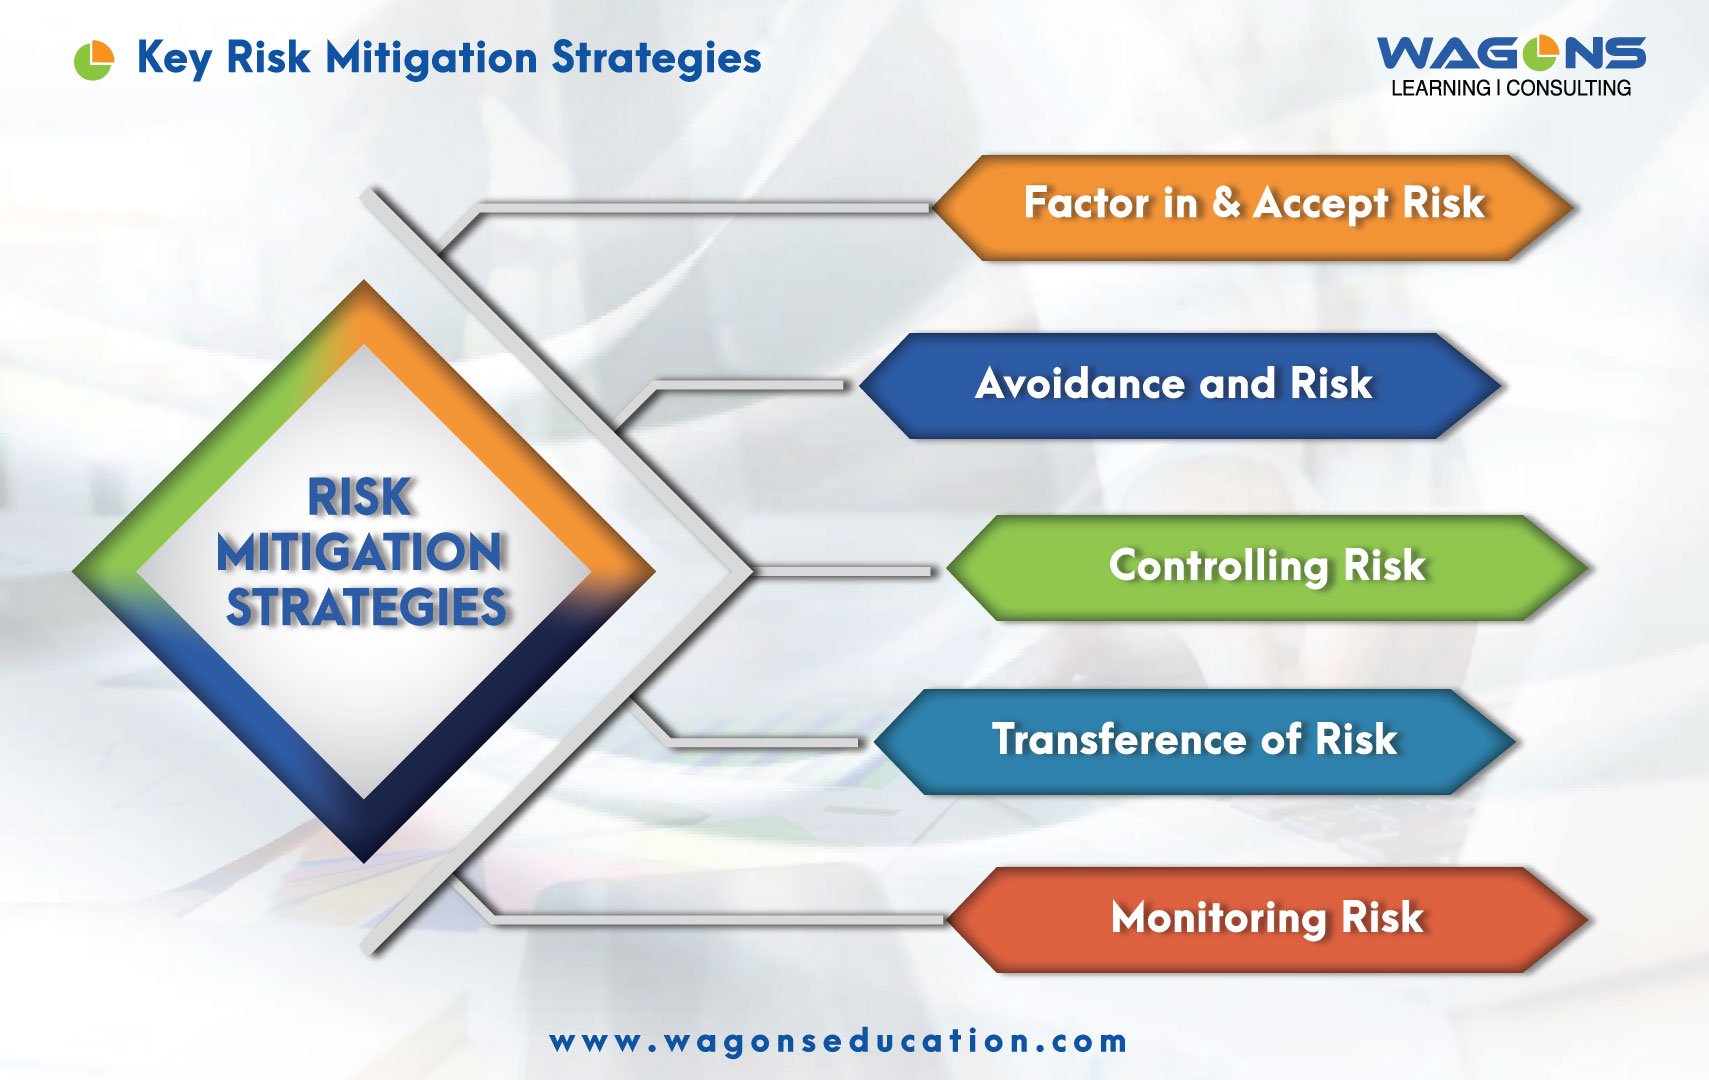 Risk Mitigation